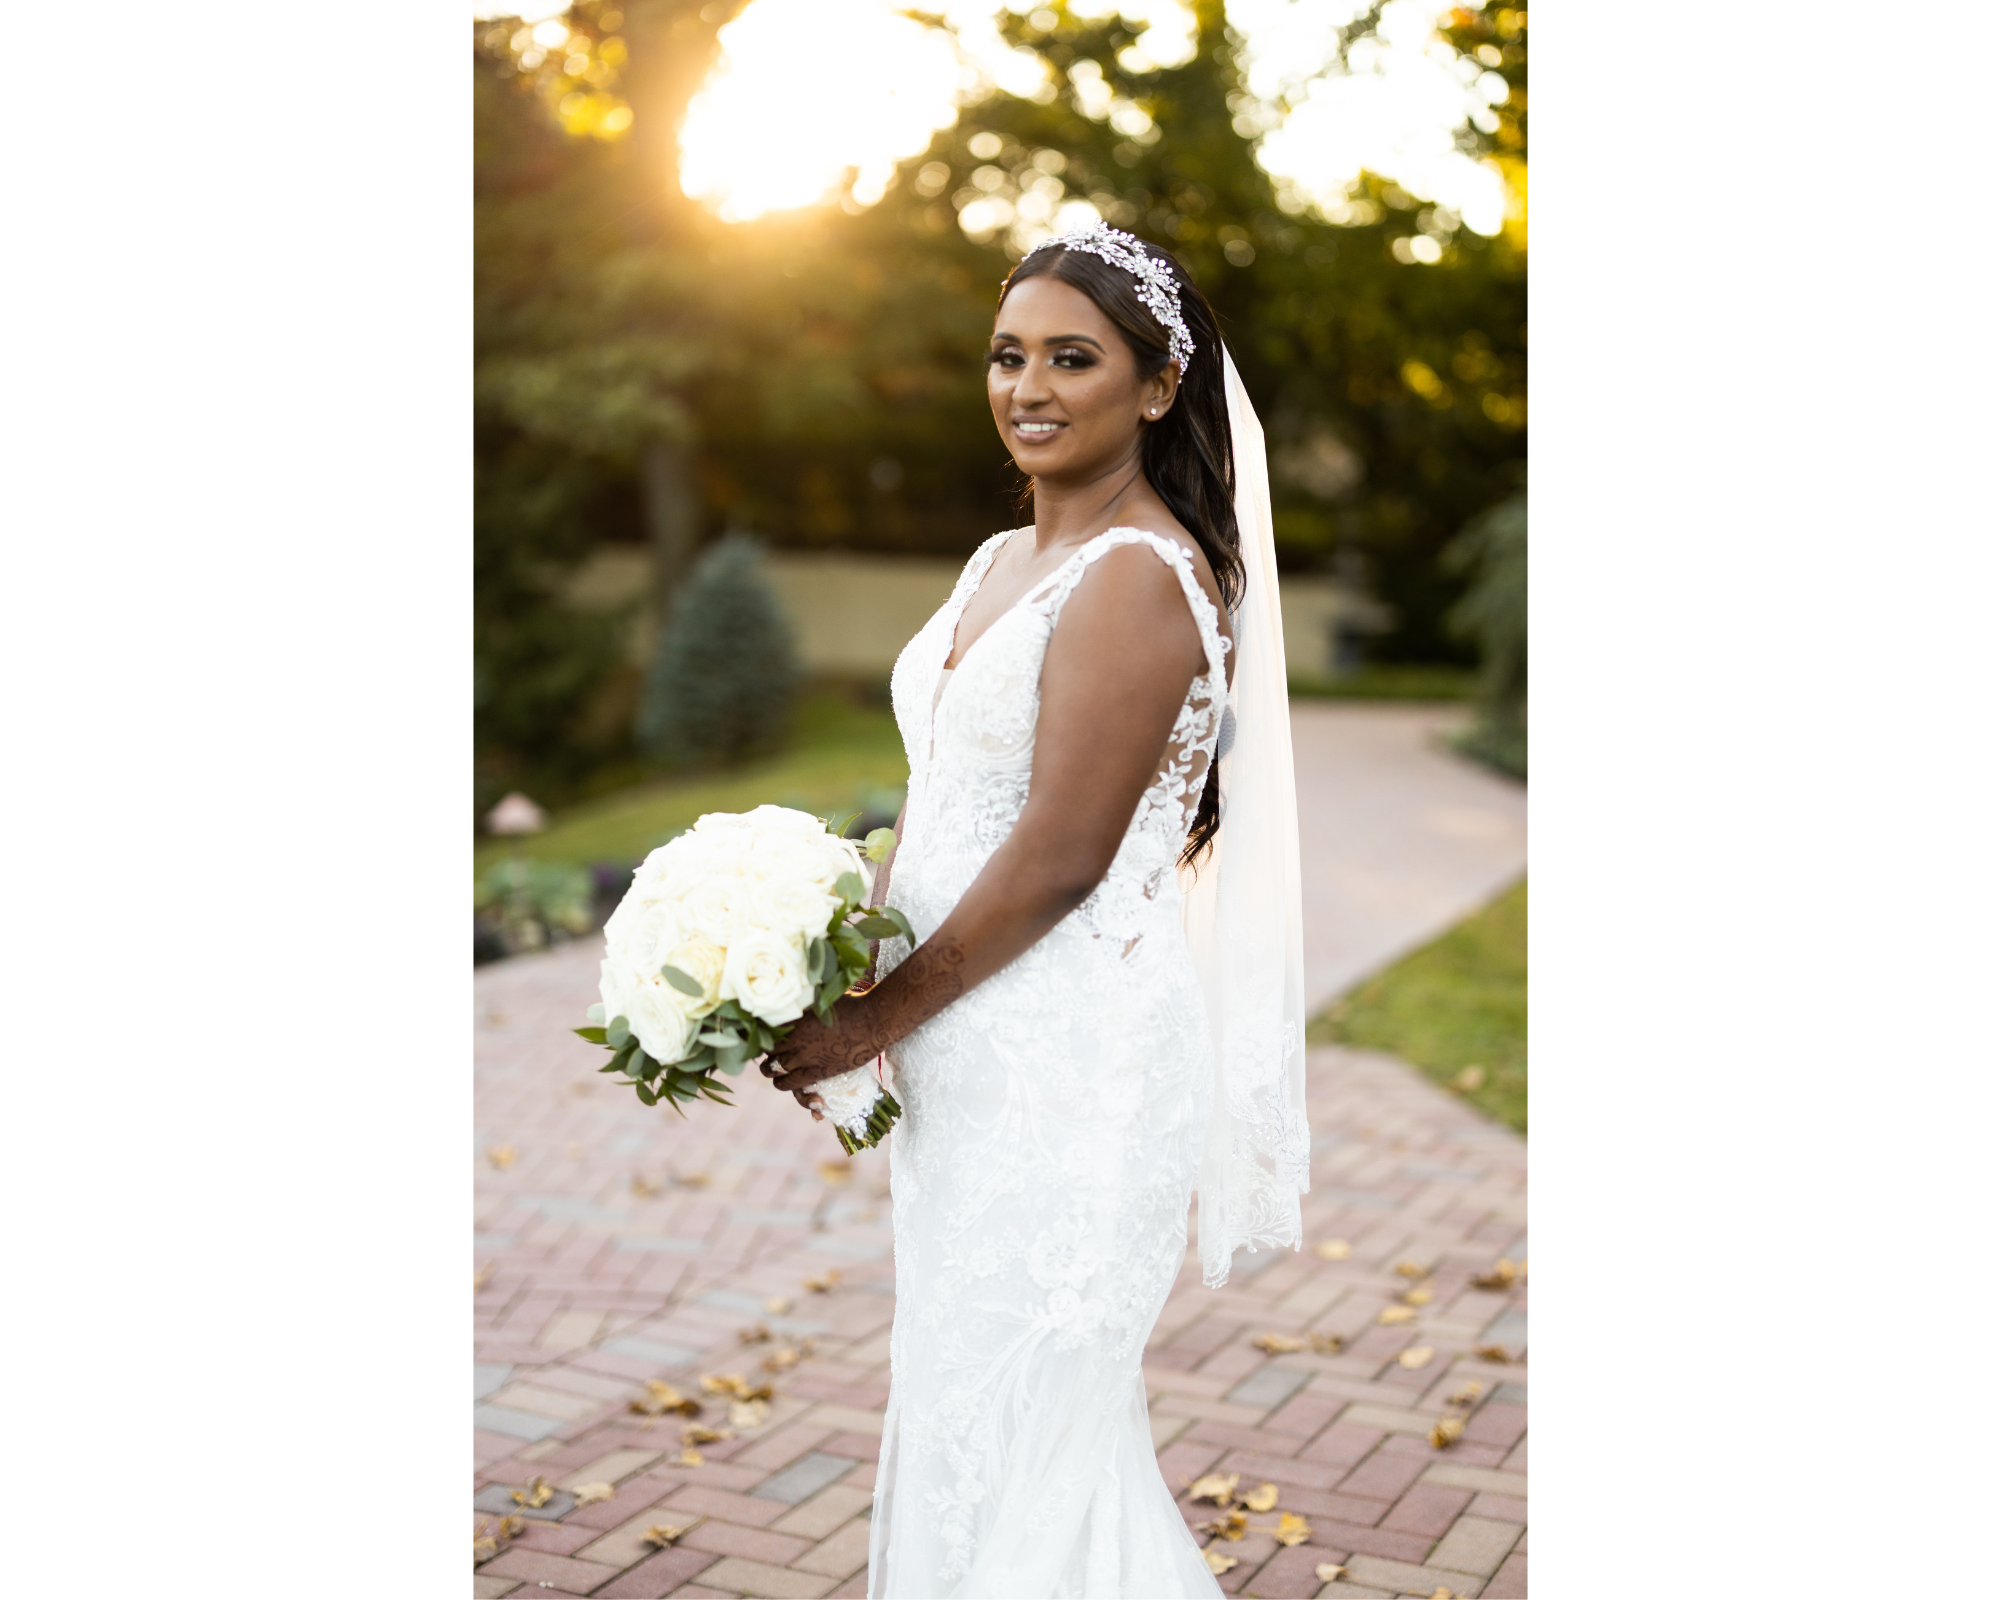 Stunning bride Avita's gorgeous, sparkly wedding day makeup and Swarovski crystal headband.